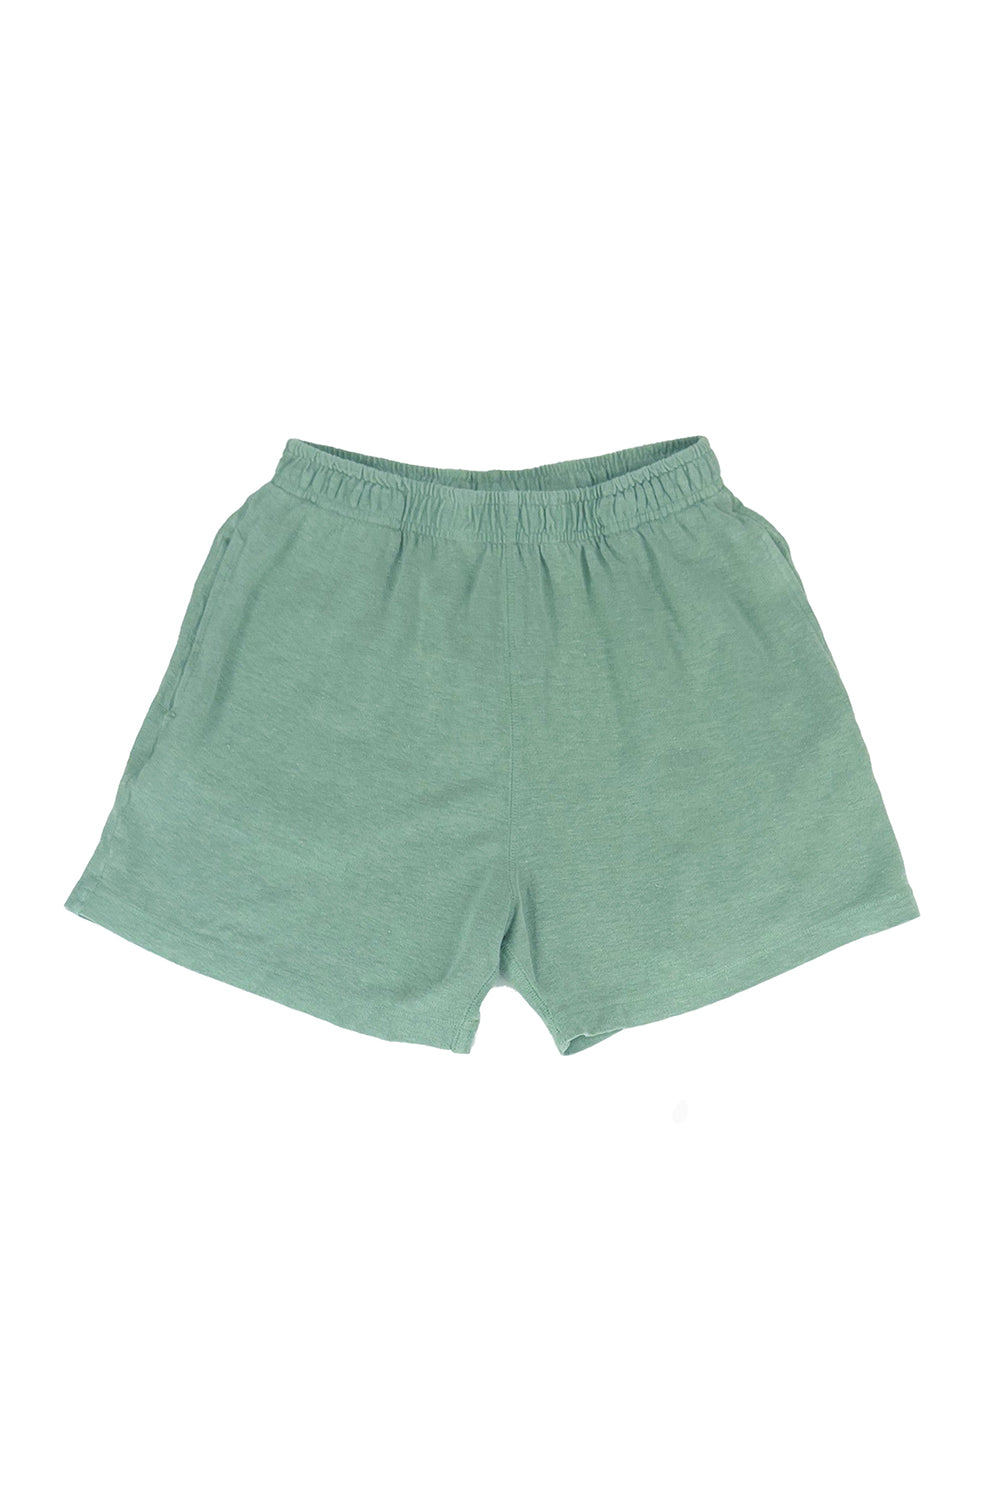 Kona 100% Hemp Short | Jungmaven Hemp Clothing & Accessories / Color: Sage Green